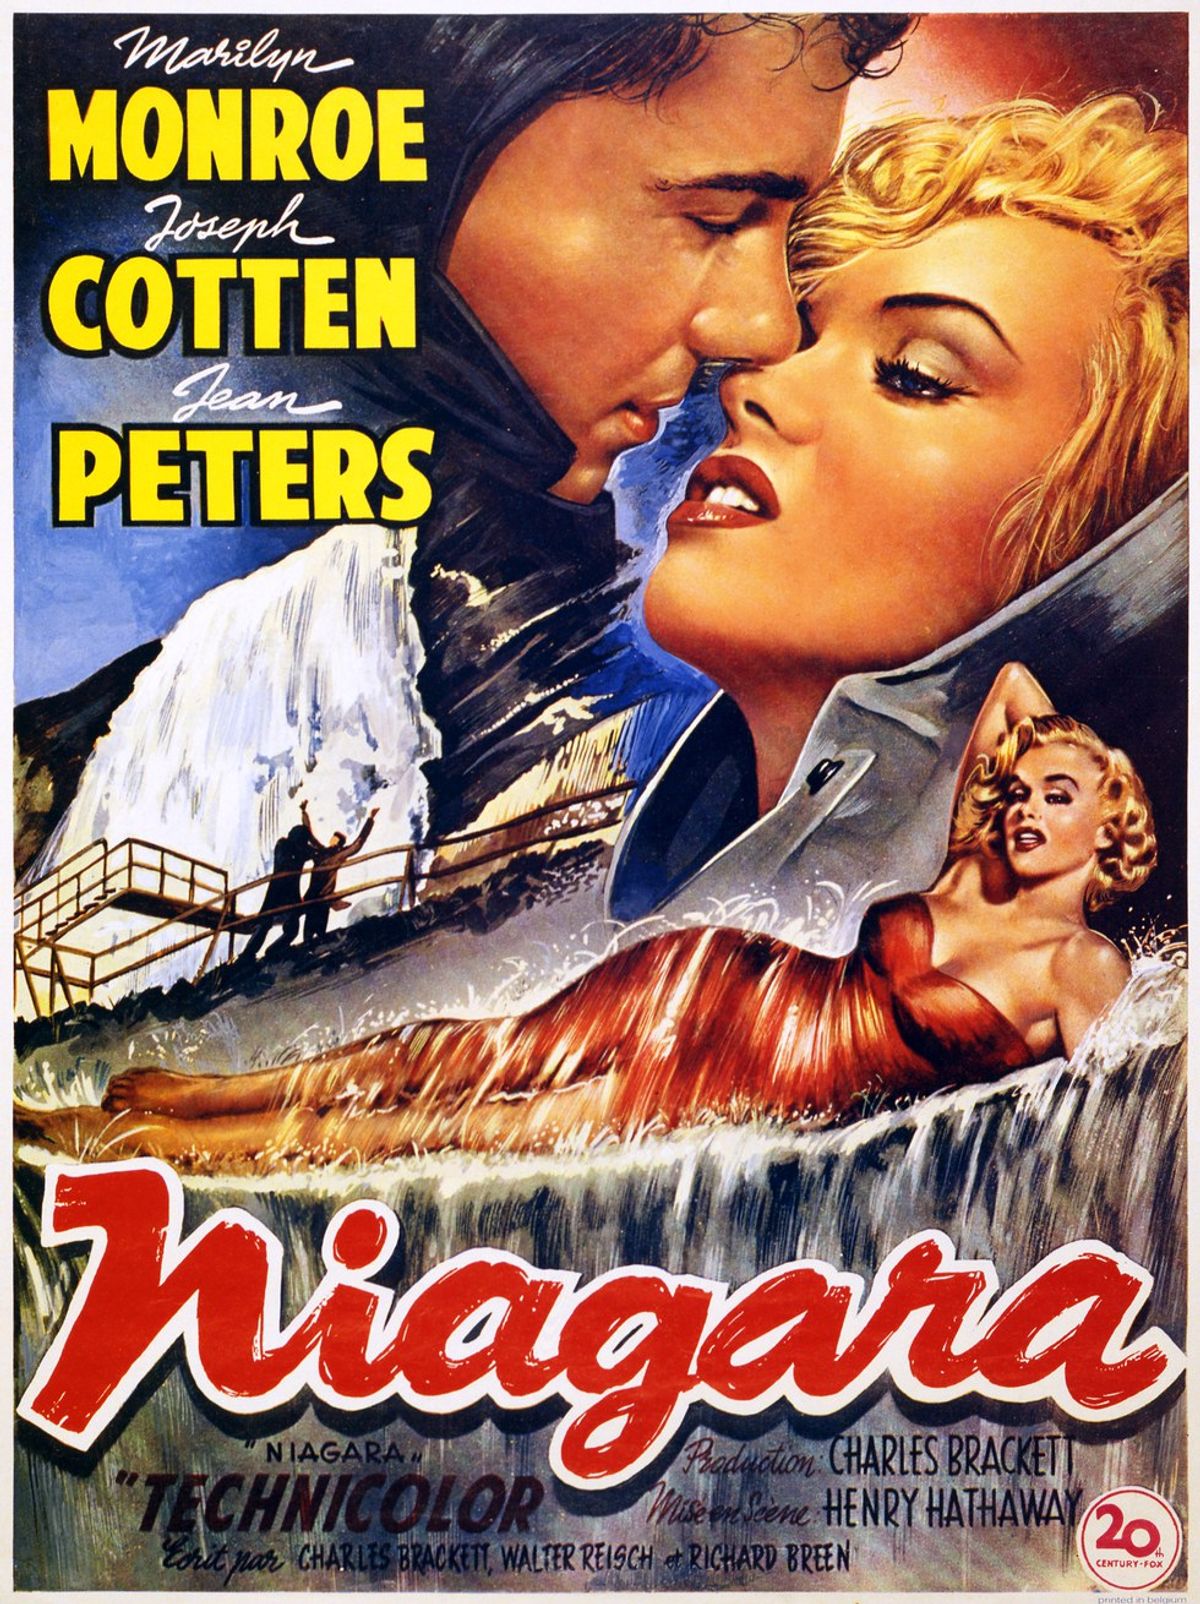 Film Response to Henry Hathaway's "Niagara"